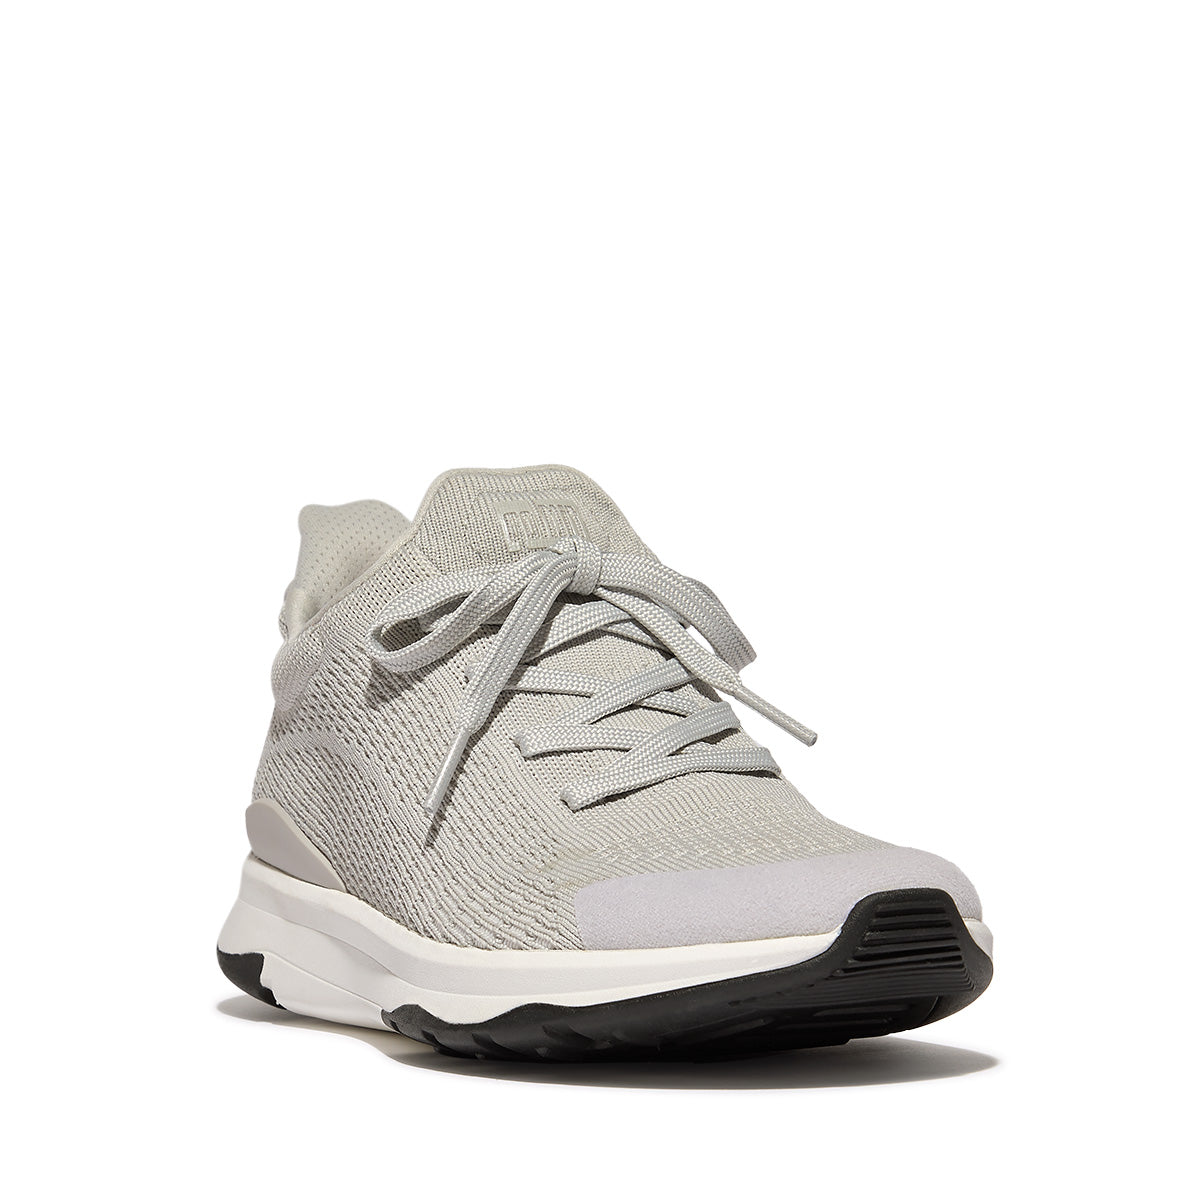 Fit-Flop Vitamin Ffx Knit Sports Sneakers Tiptoe Grey נעלי פיט פלופ לנשים